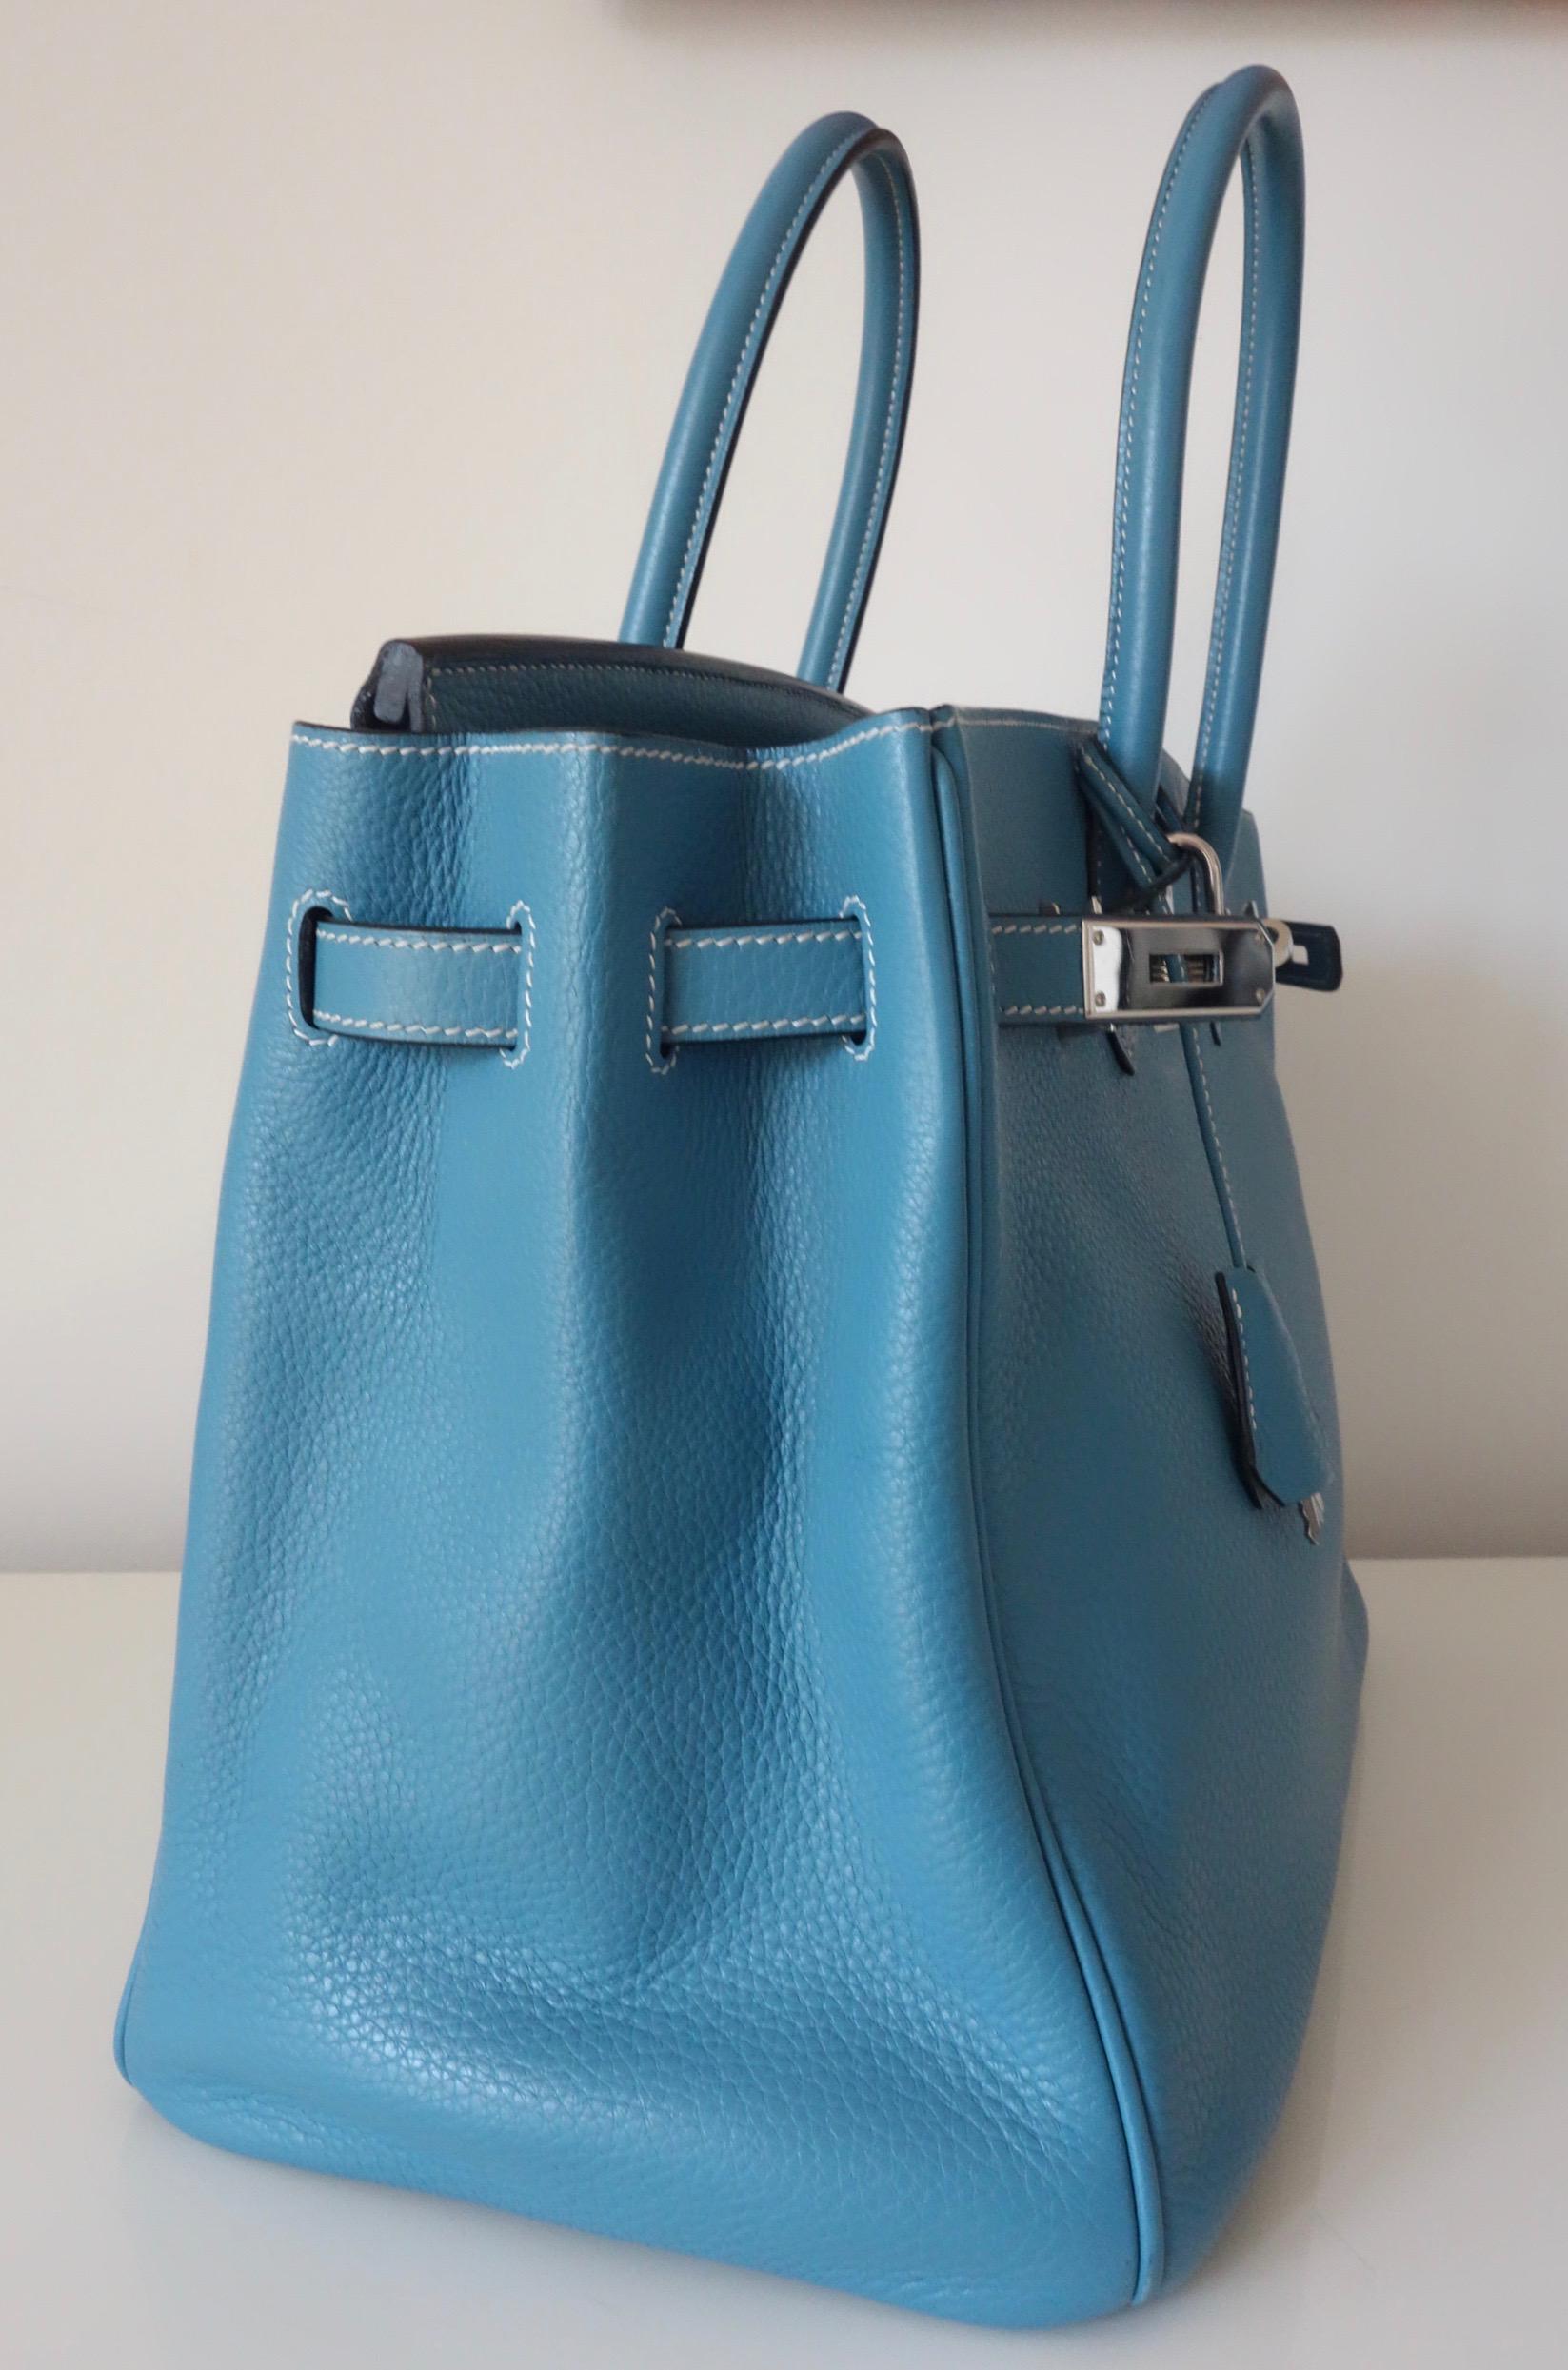 Hermès Taurillon Clemence Bleu Jean PHW 35 cm Birkin Top Handle Bag 3